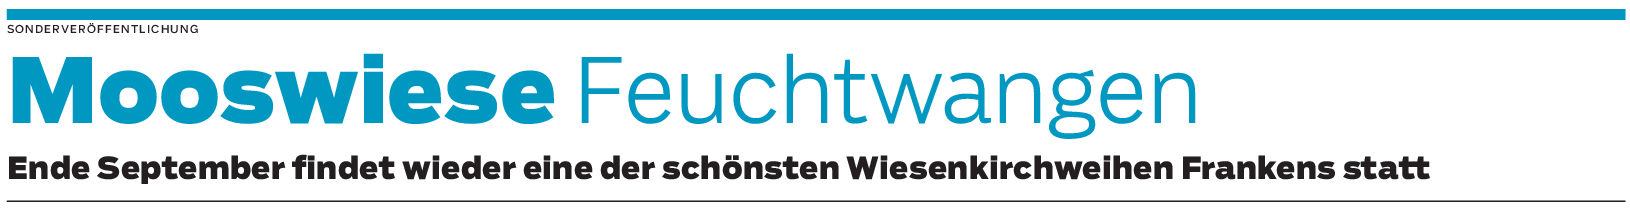 Wiesenkirchweih in Feuchtwangen: Tagelang herrscht buntes Treiben